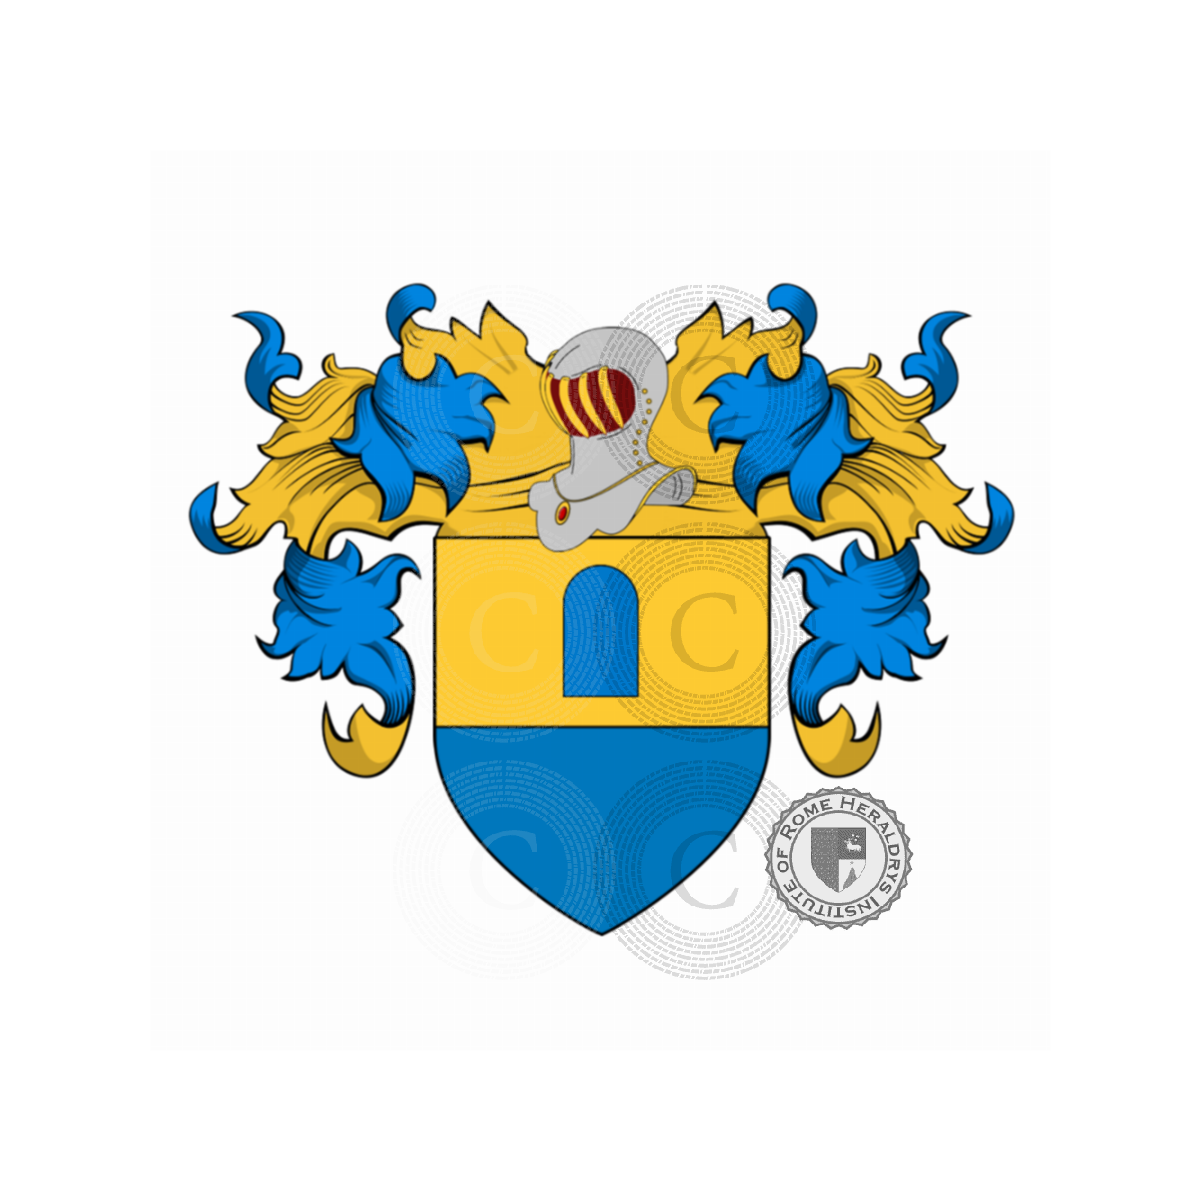 Wappen der FamilieCicci (Toscana), Ciccio,Cicciu